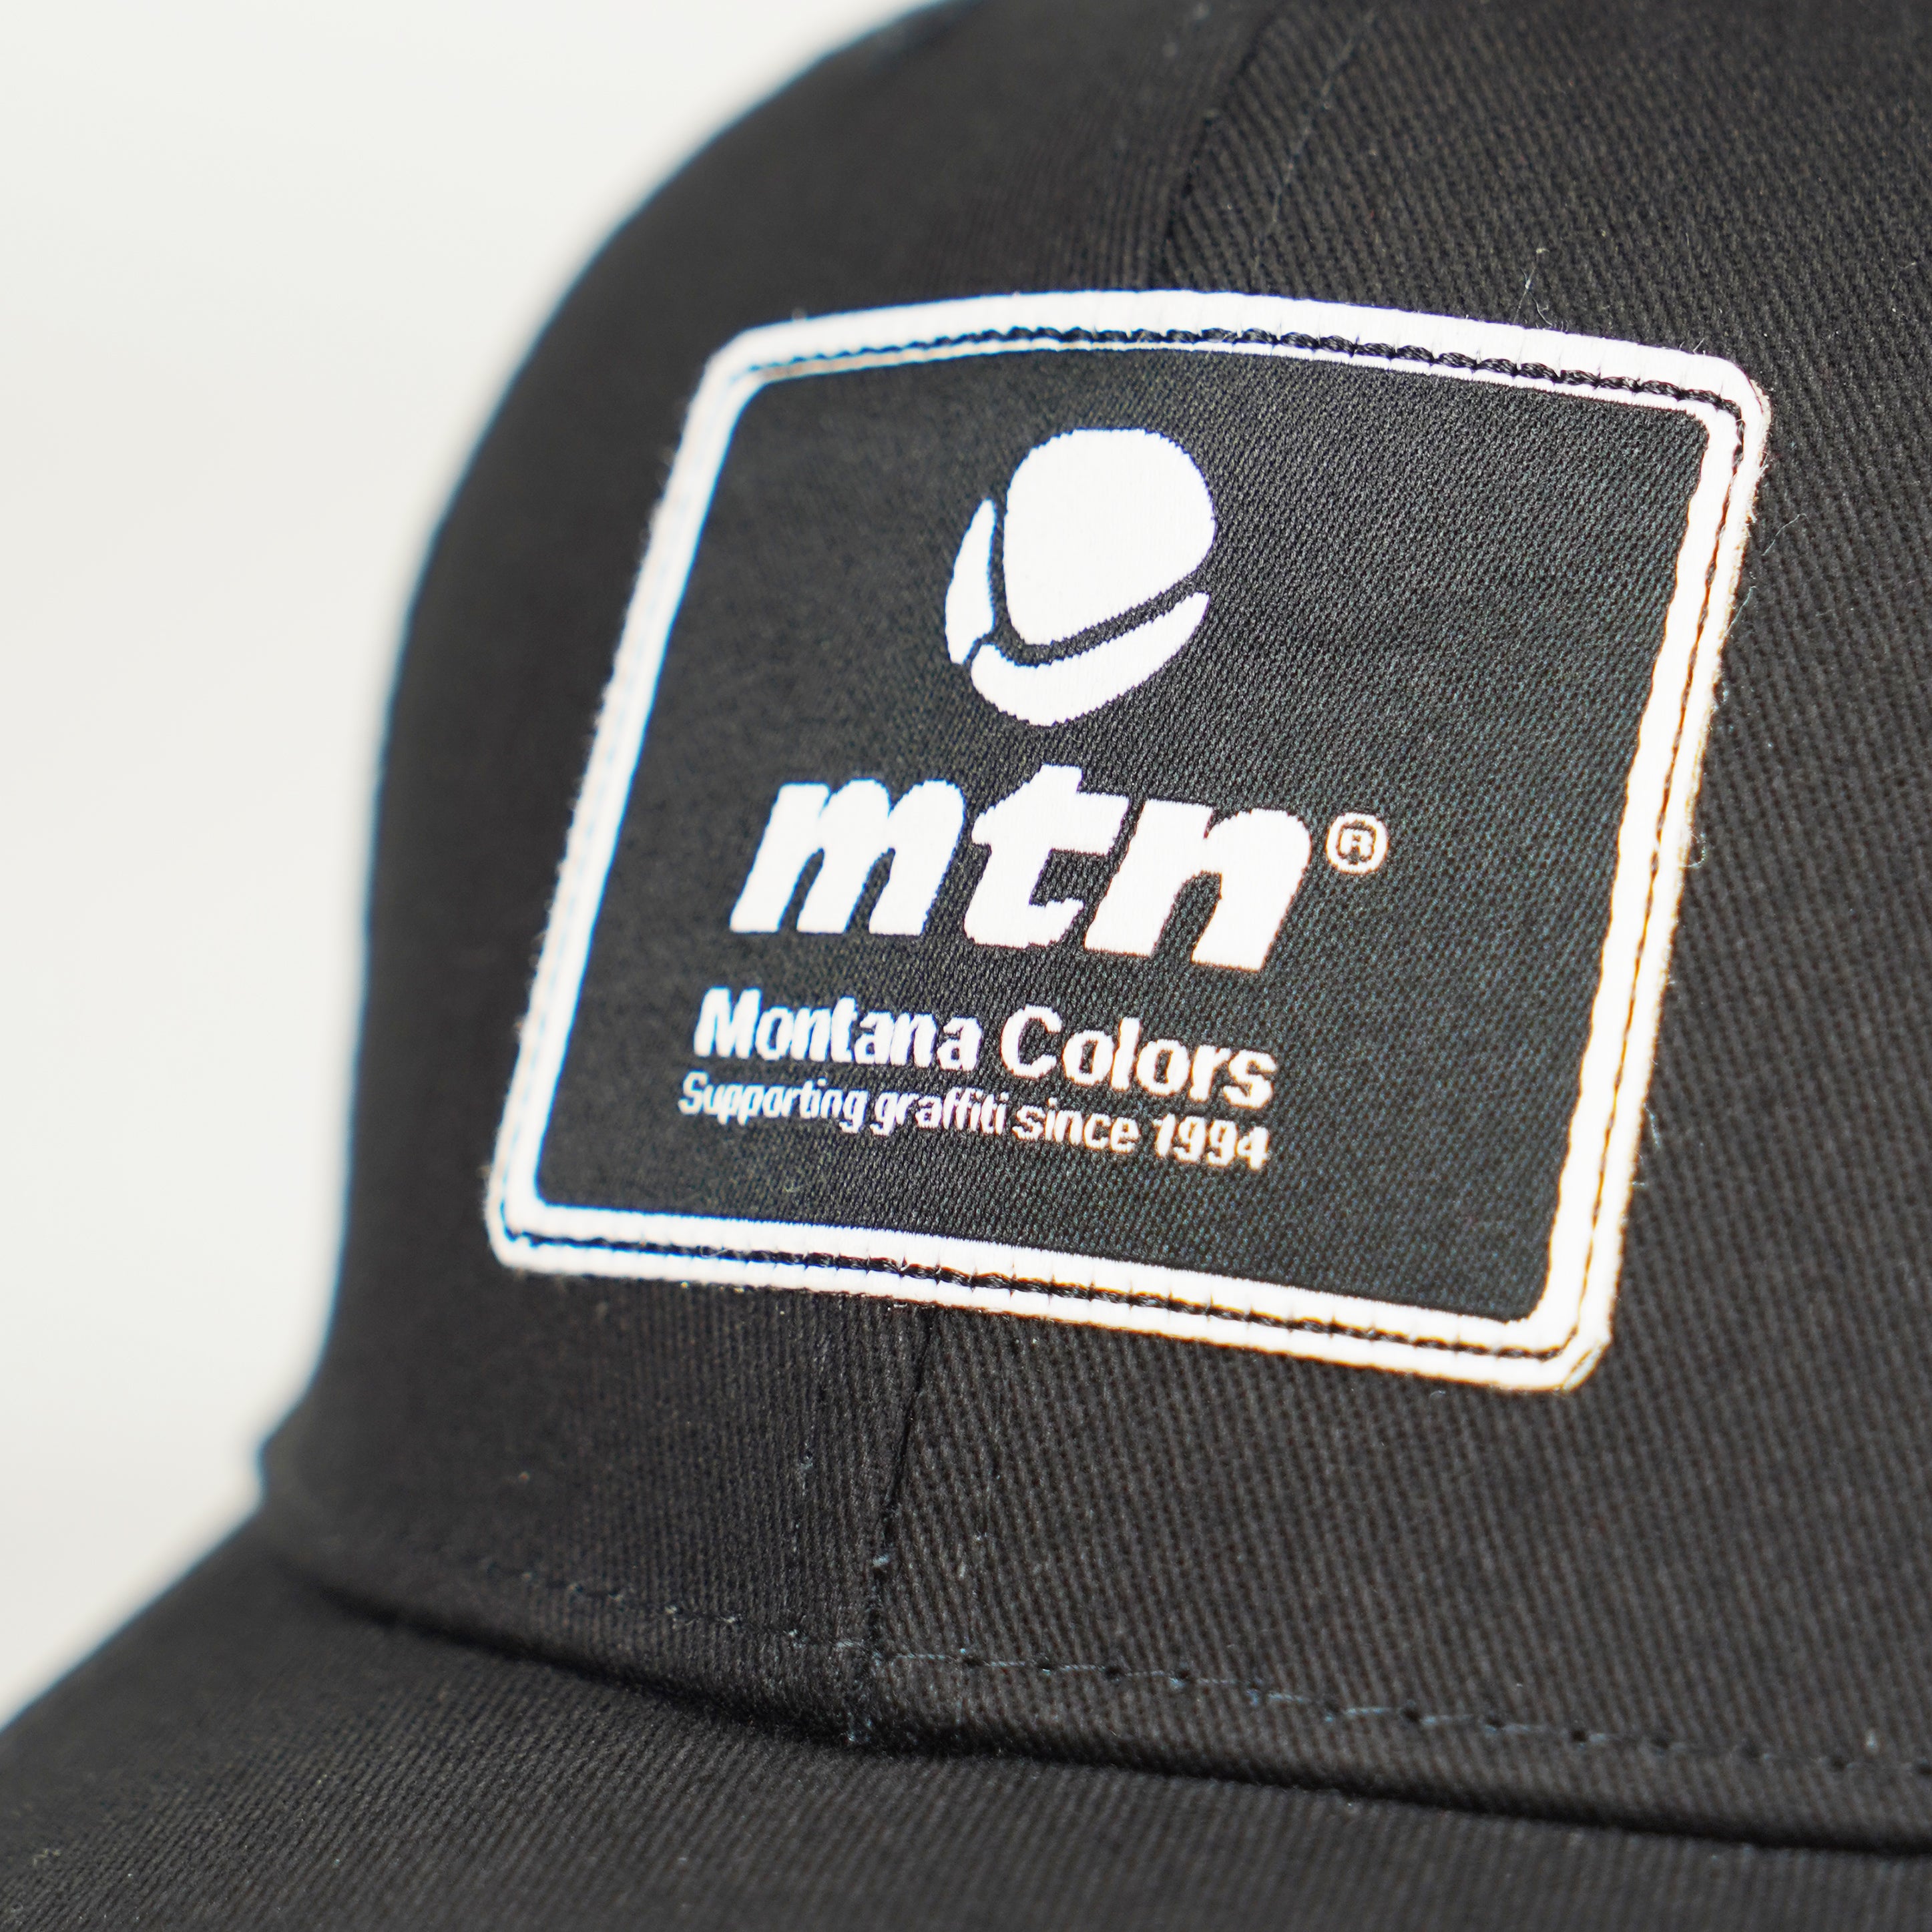 MTN "Supporting Graffiti" Trucker Hat Black